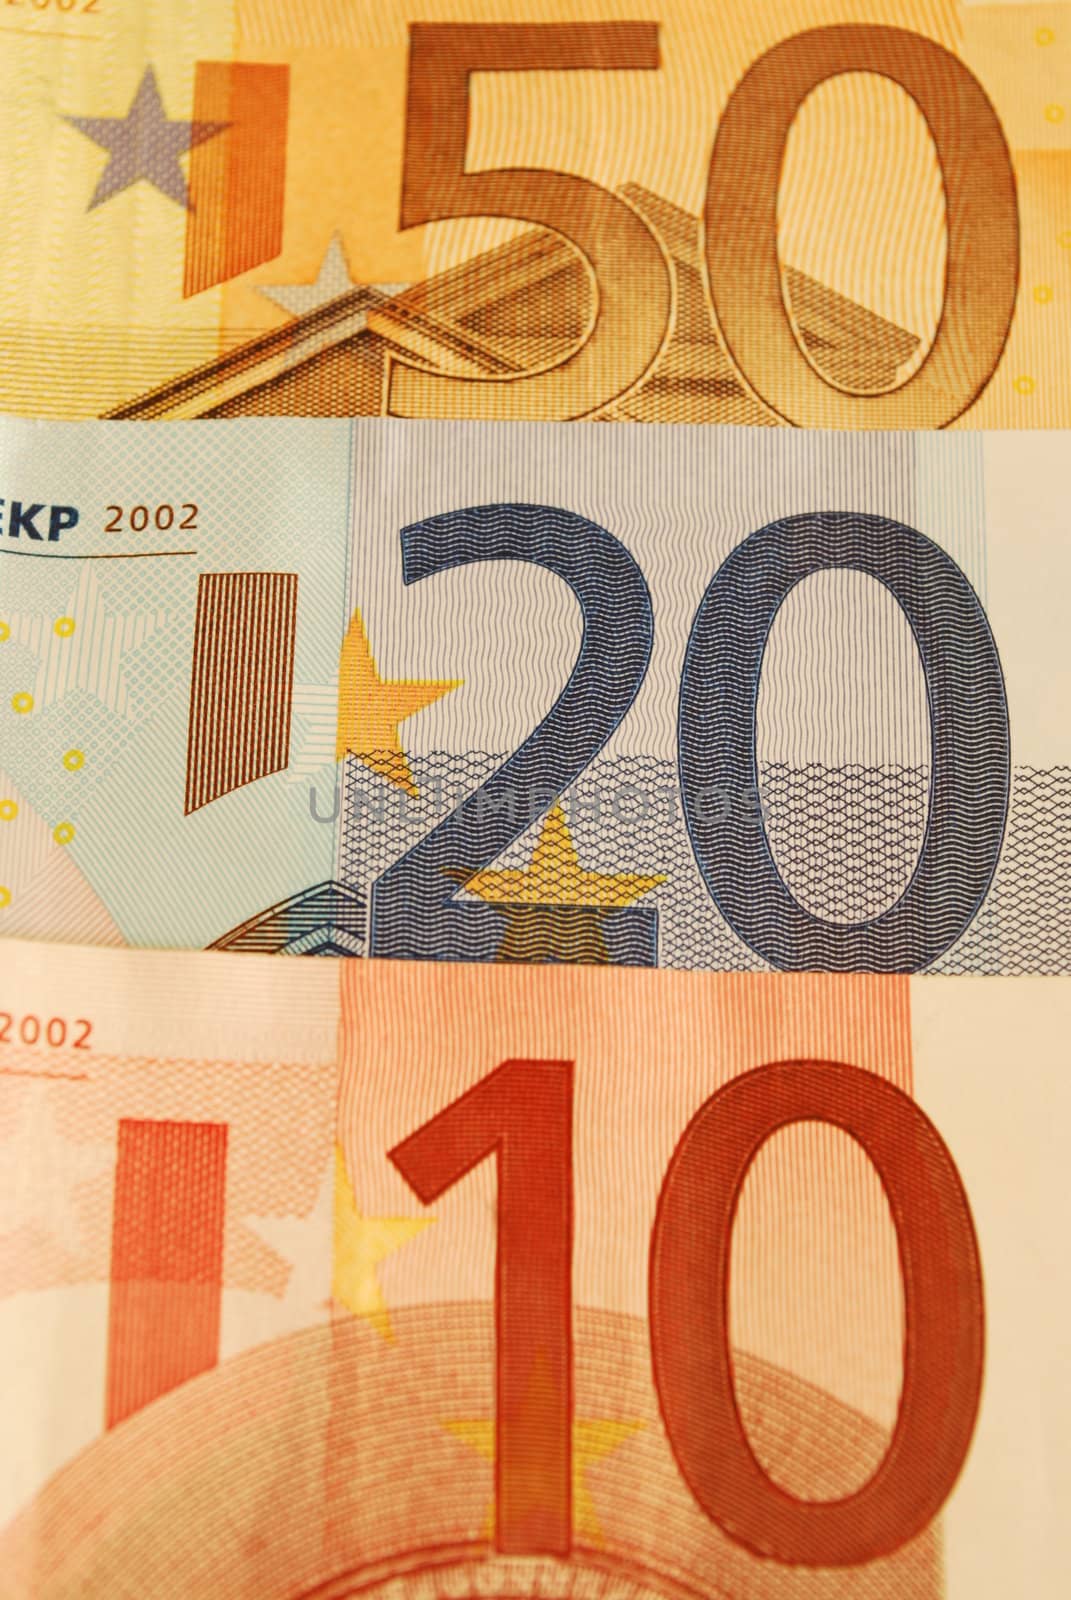 euro bills (european currency)